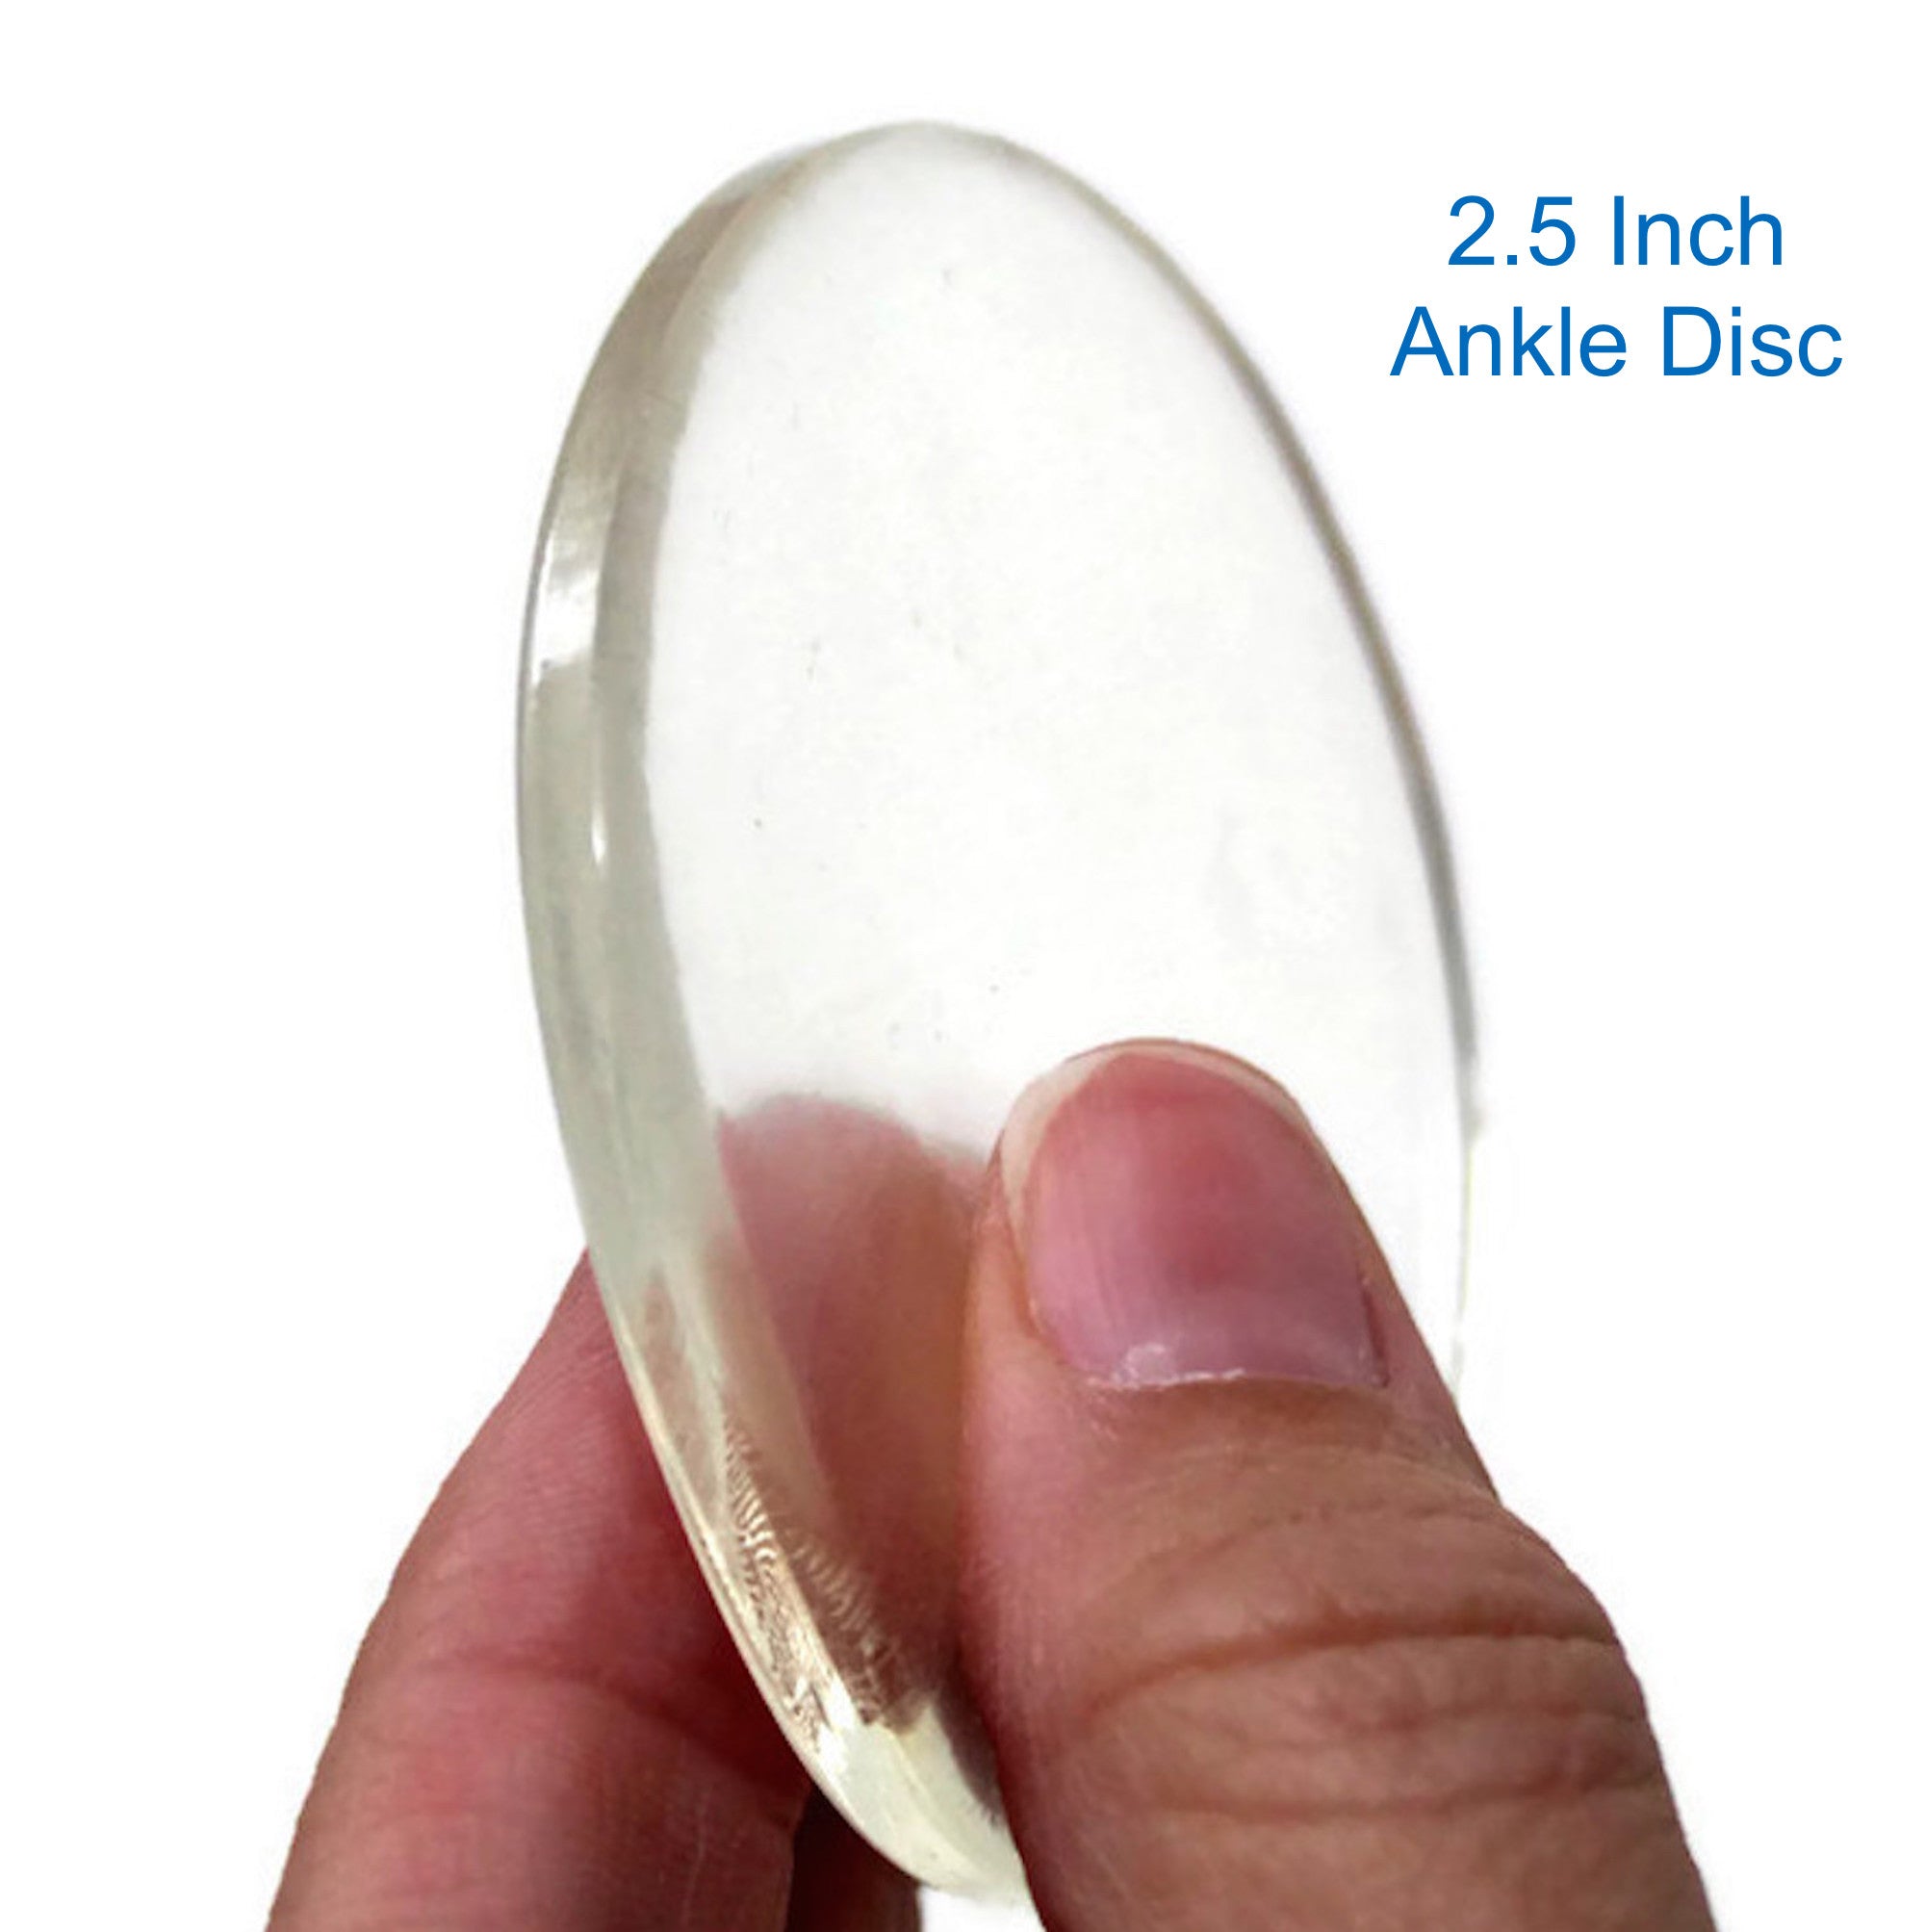  CRS Cross Ankle Gel Discs - 4 inch Body Gel Pads